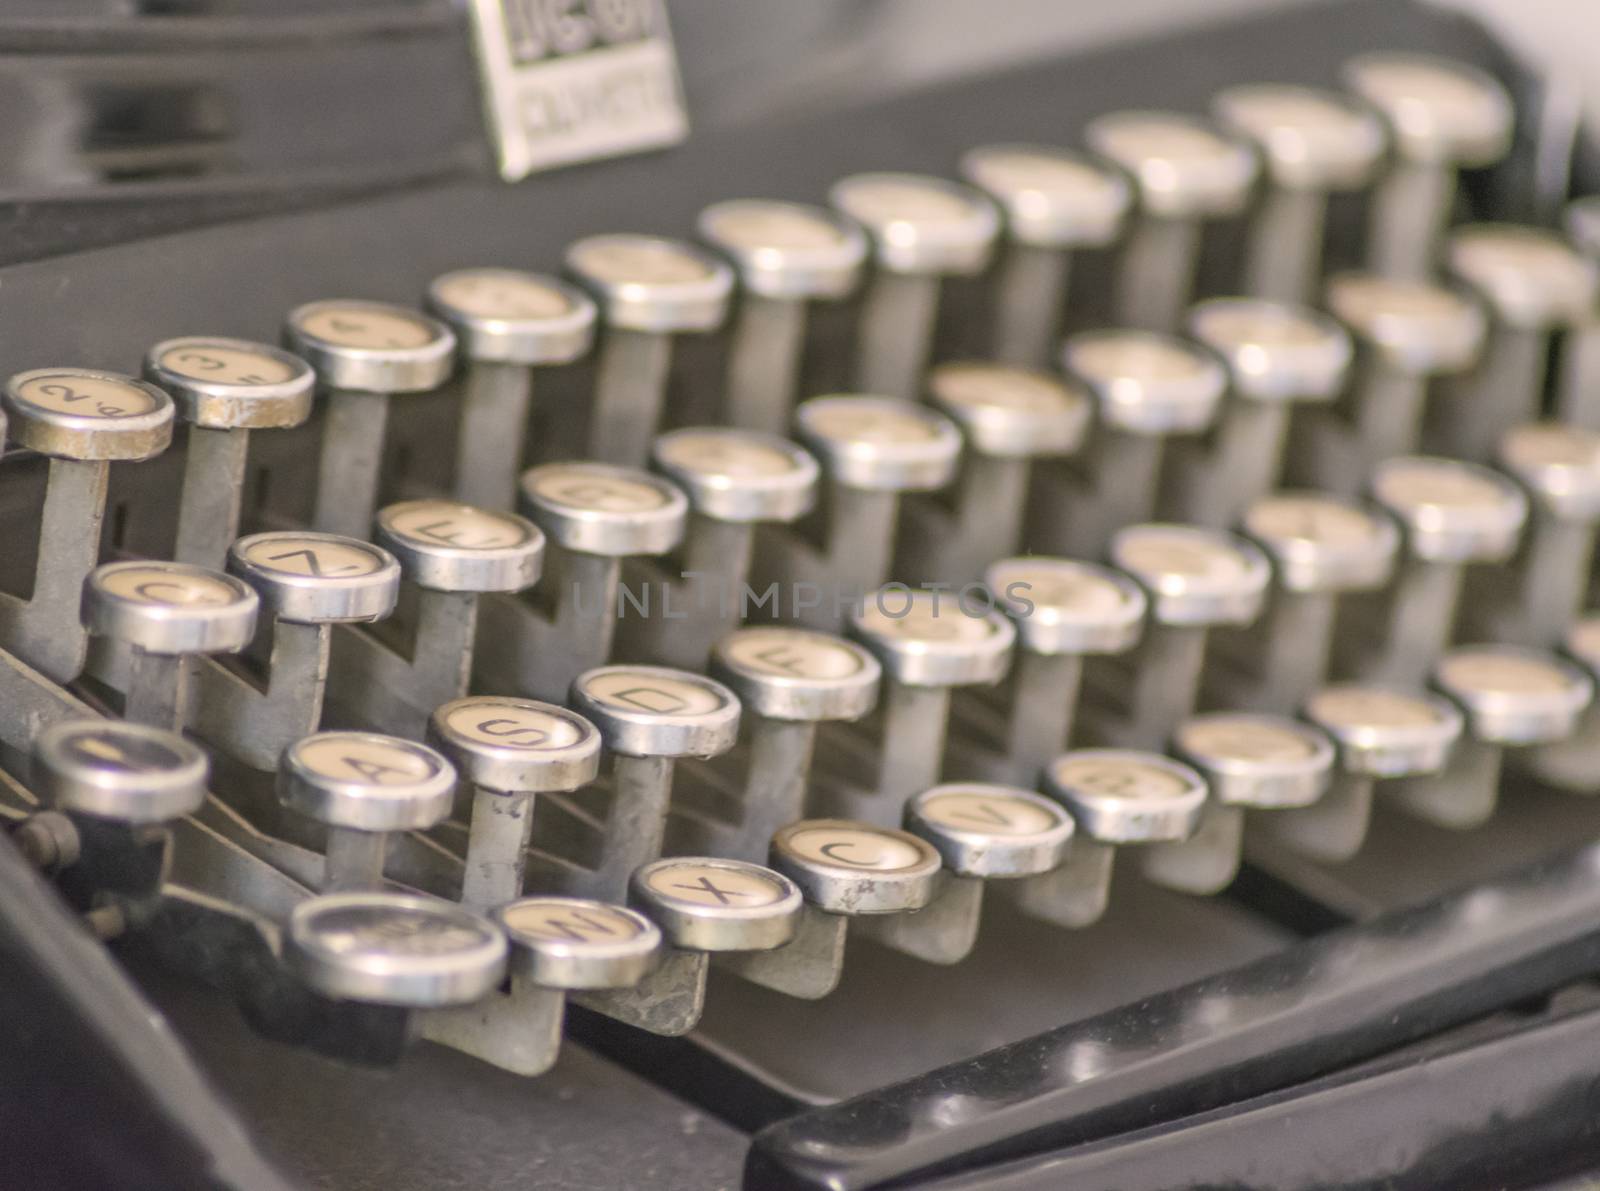 Old Typewriter  by rarrarorro